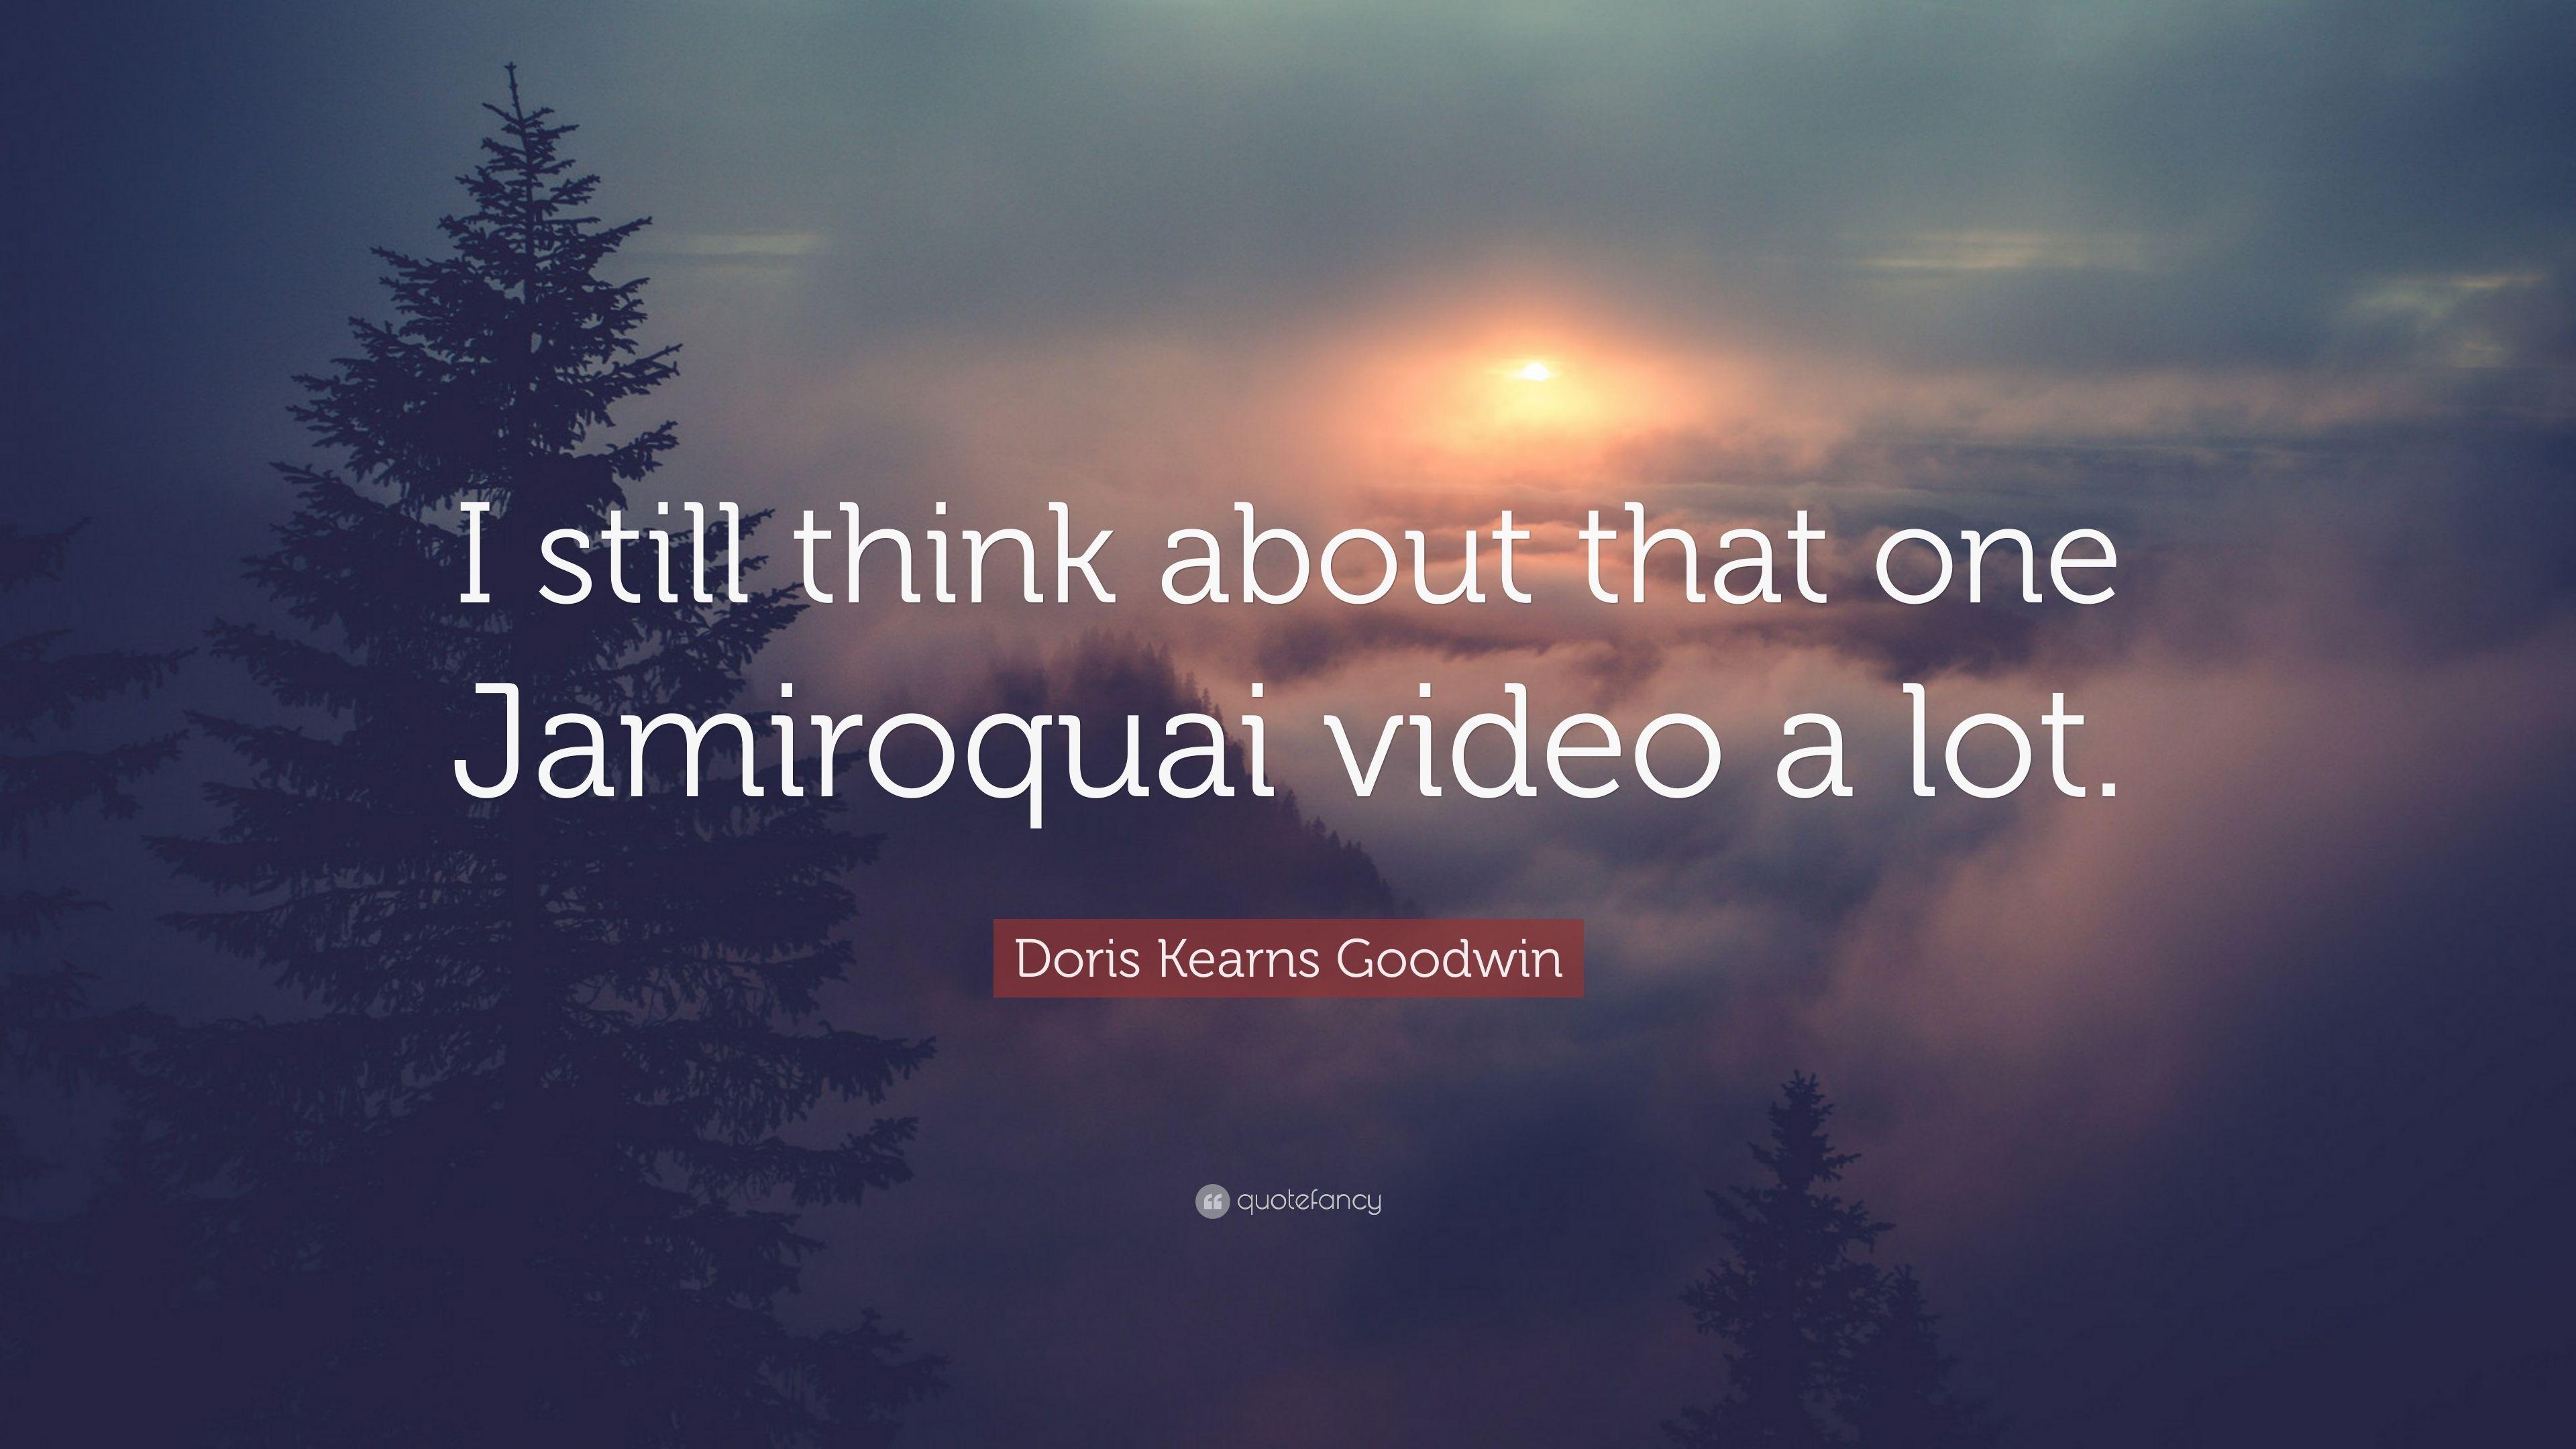 Doris Kearns Goodwin Quote: “I still think about that one Jamiroquai